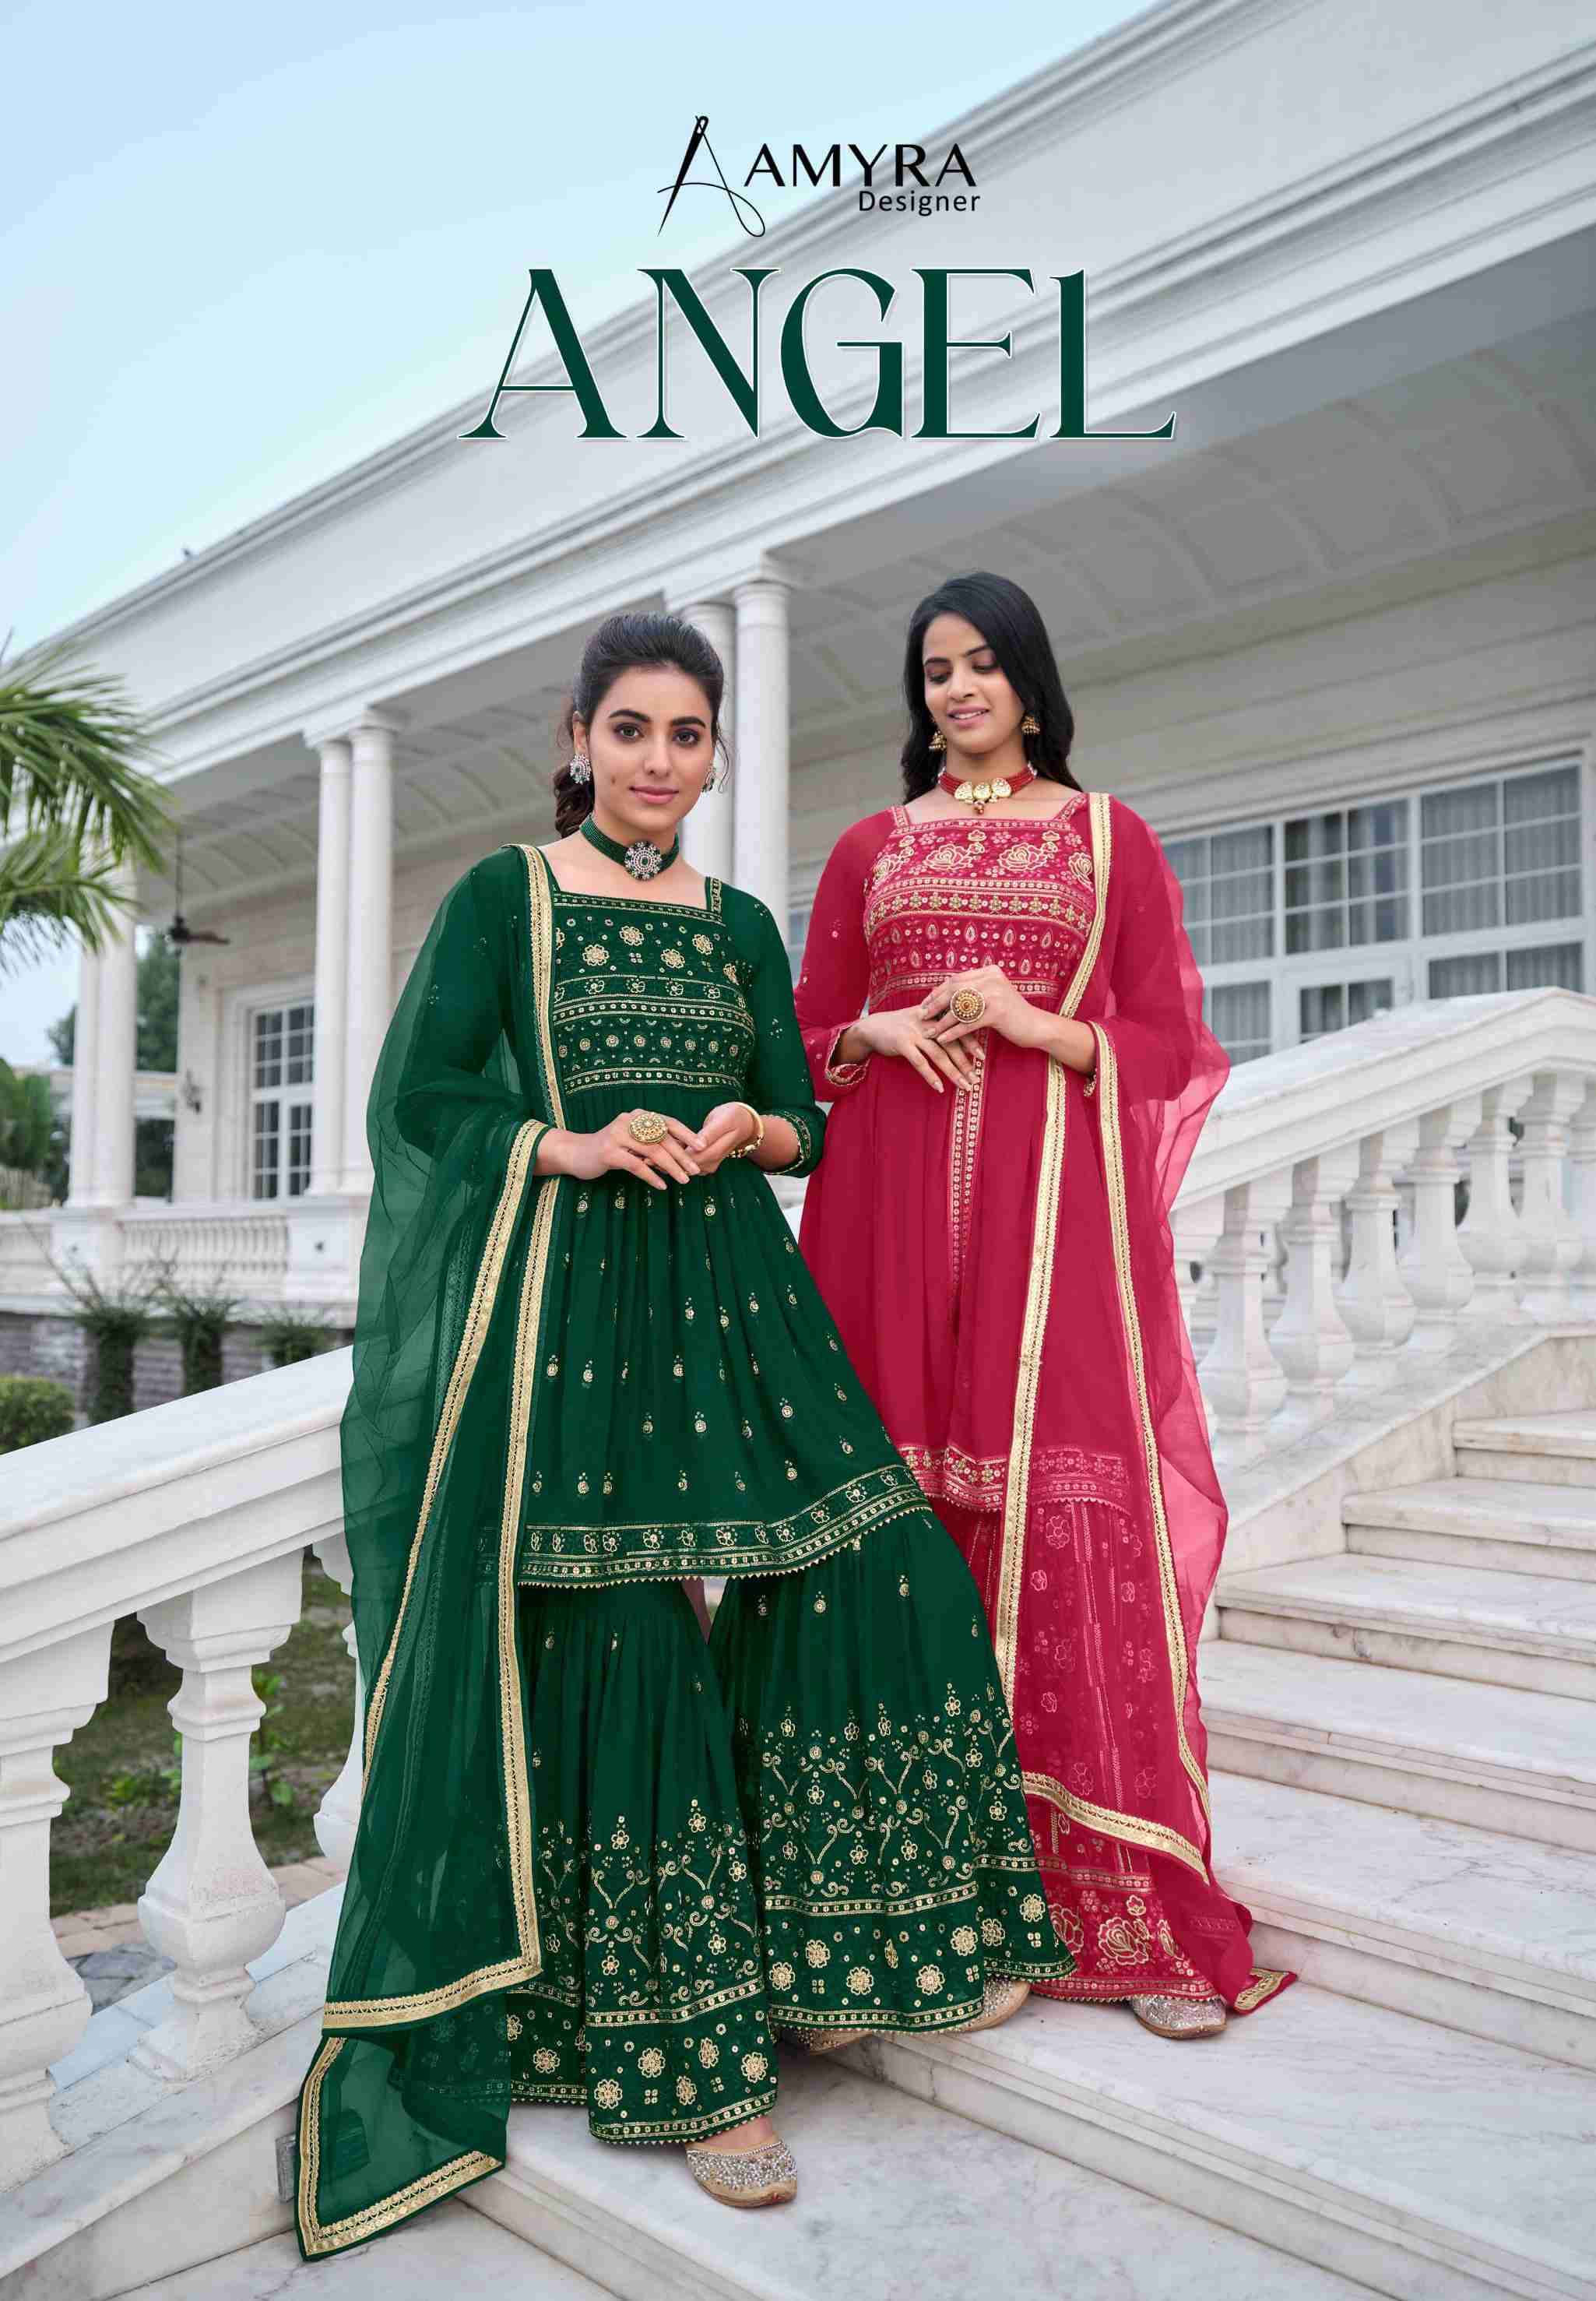 Amyra Designer Angel Lates Designs Wedding Wear Sharara Dress New Designs